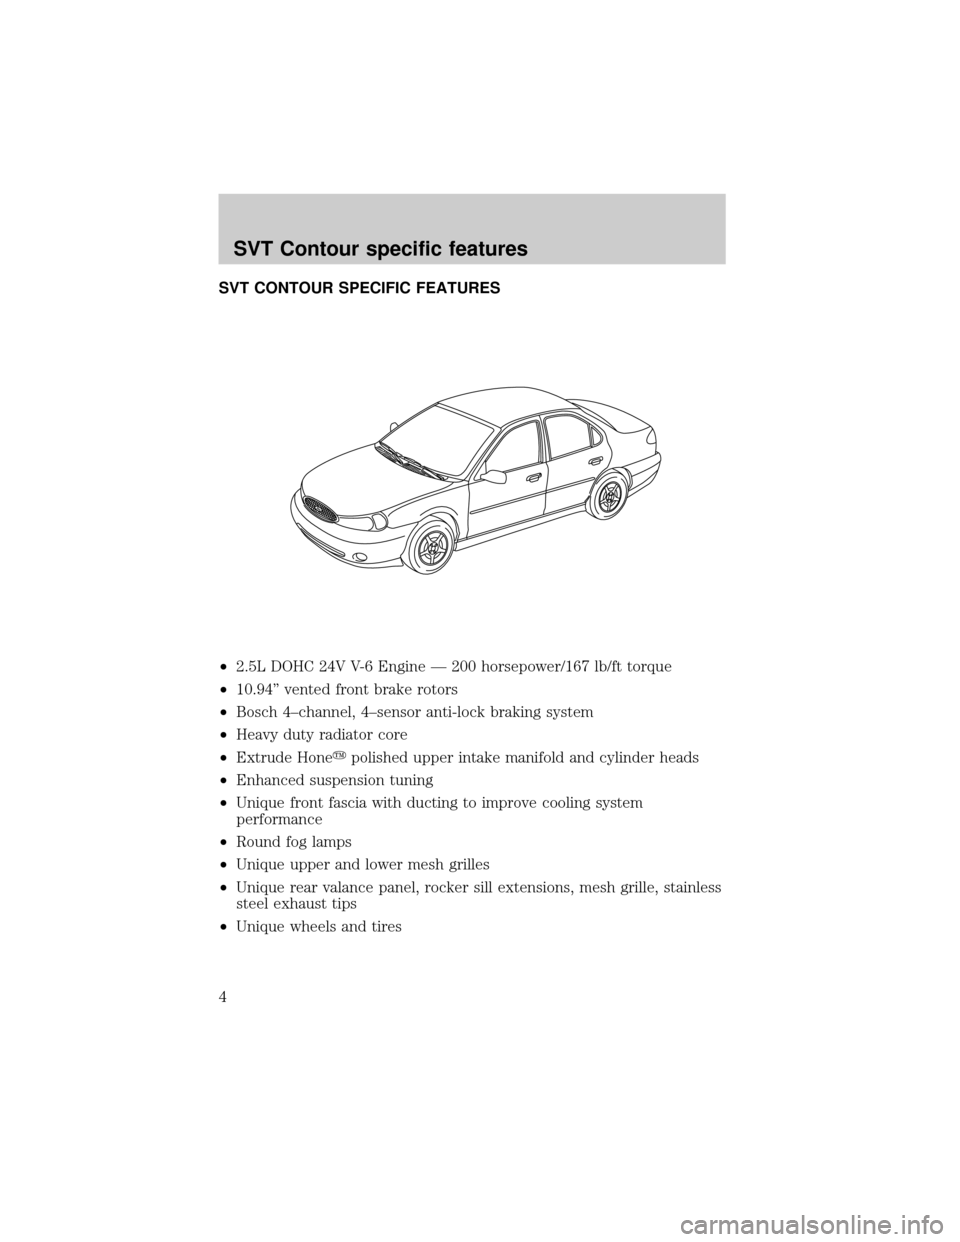 FORD CONTOUR 2000 2.G SVT Supplement Manual SVT CONTOUR SPECIFIC FEATURES
²2.5L DOHC 24V V-6 Engine Ð 200 horsepower/167 lb/ft torque
²10.94º vented front brake rotors
²Bosch 4±channel, 4±sensor anti-lock braking system
²Heavy duty radi